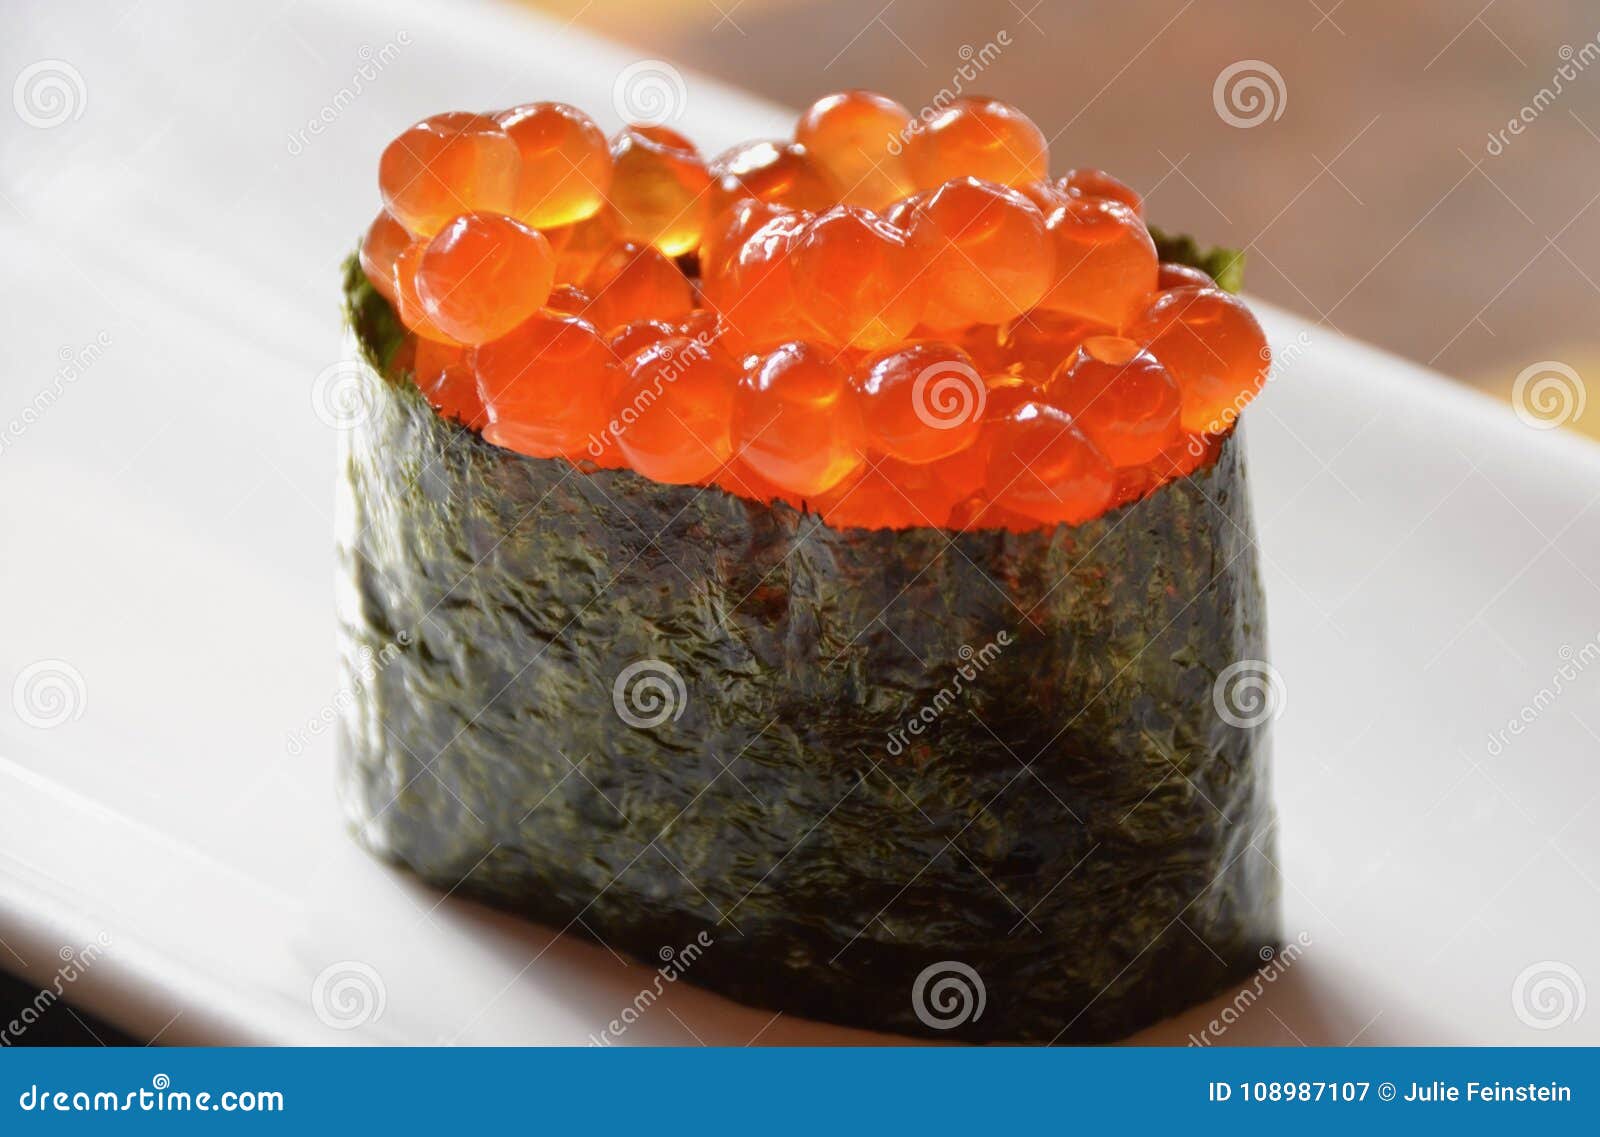 Ikura Sushi stock image. Image of fresh, rice, nori - 108987107